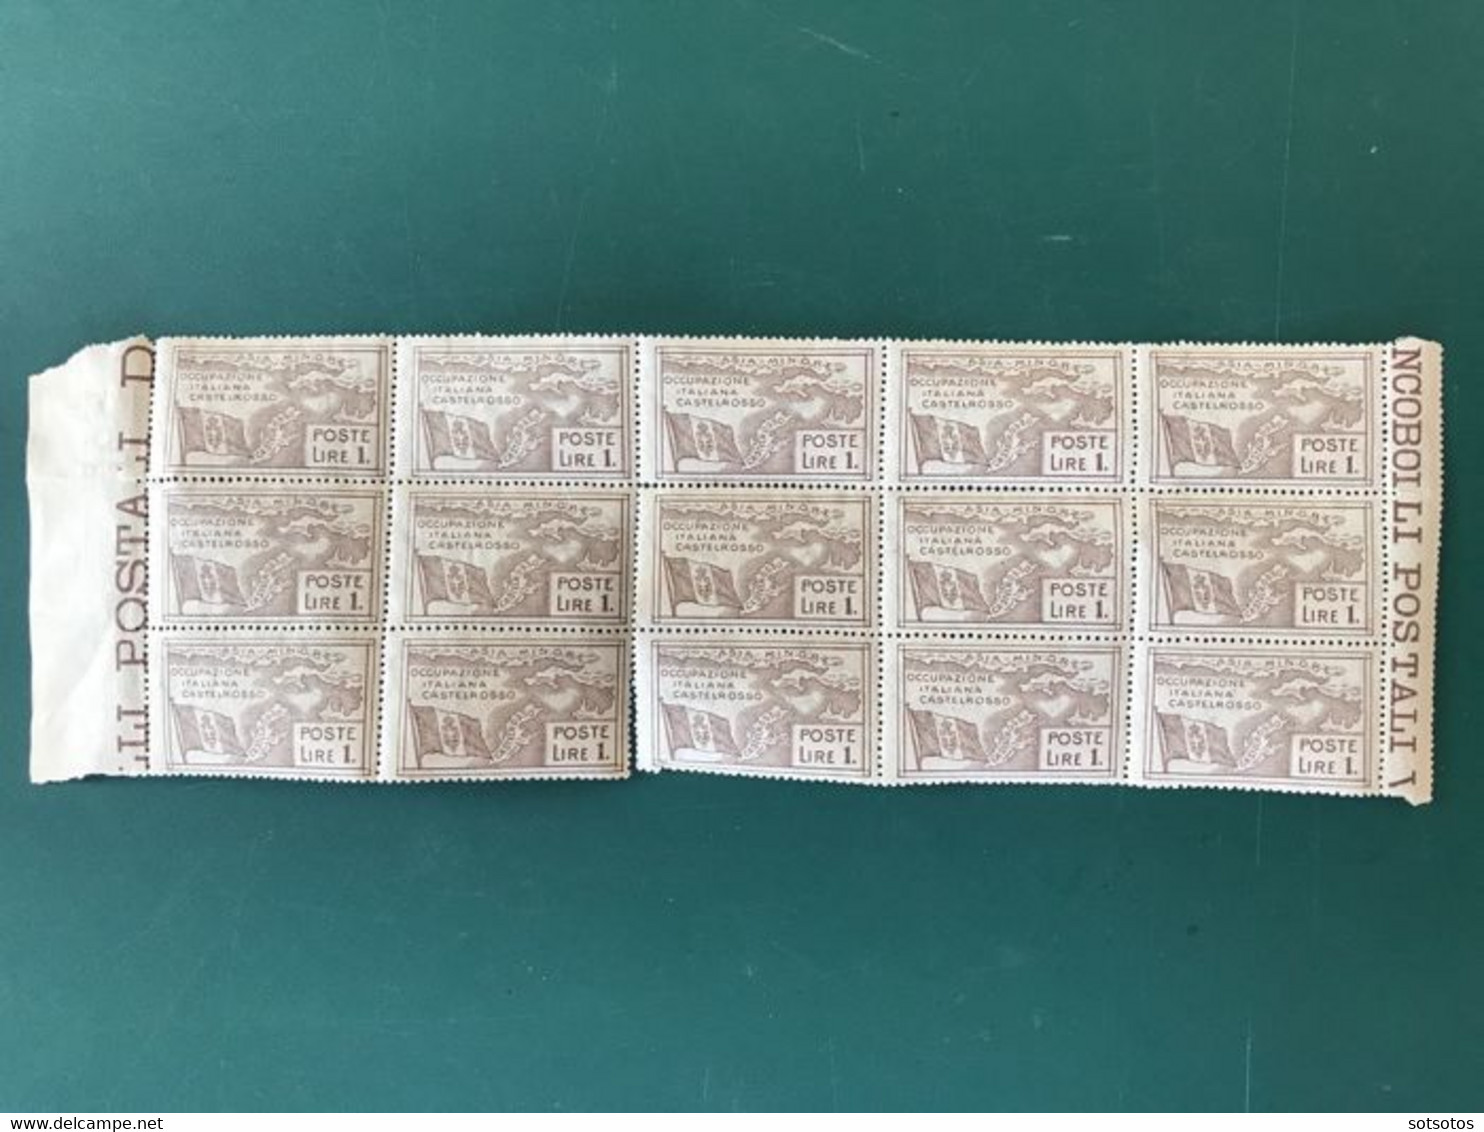 Italian Aegean Islands - Castelrosso 1923 - A complete set of 5 blocks of 15 stamps